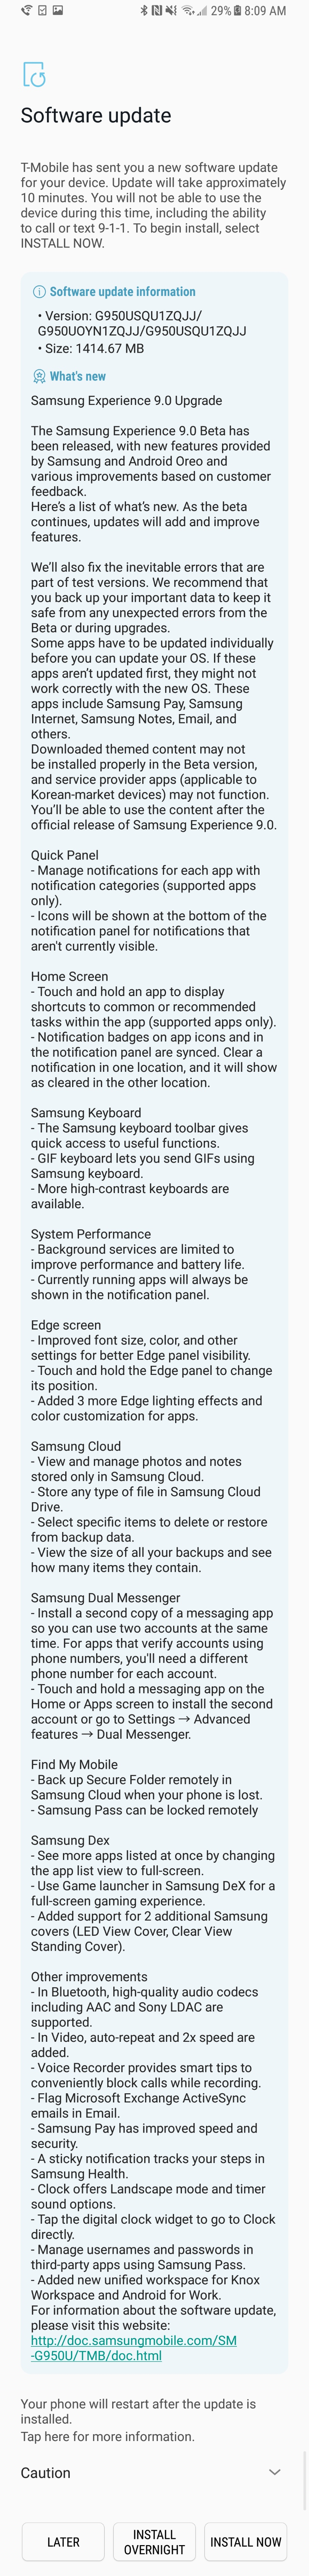 Galaxy S8 Android 8.0 Oreo Beta Changelog